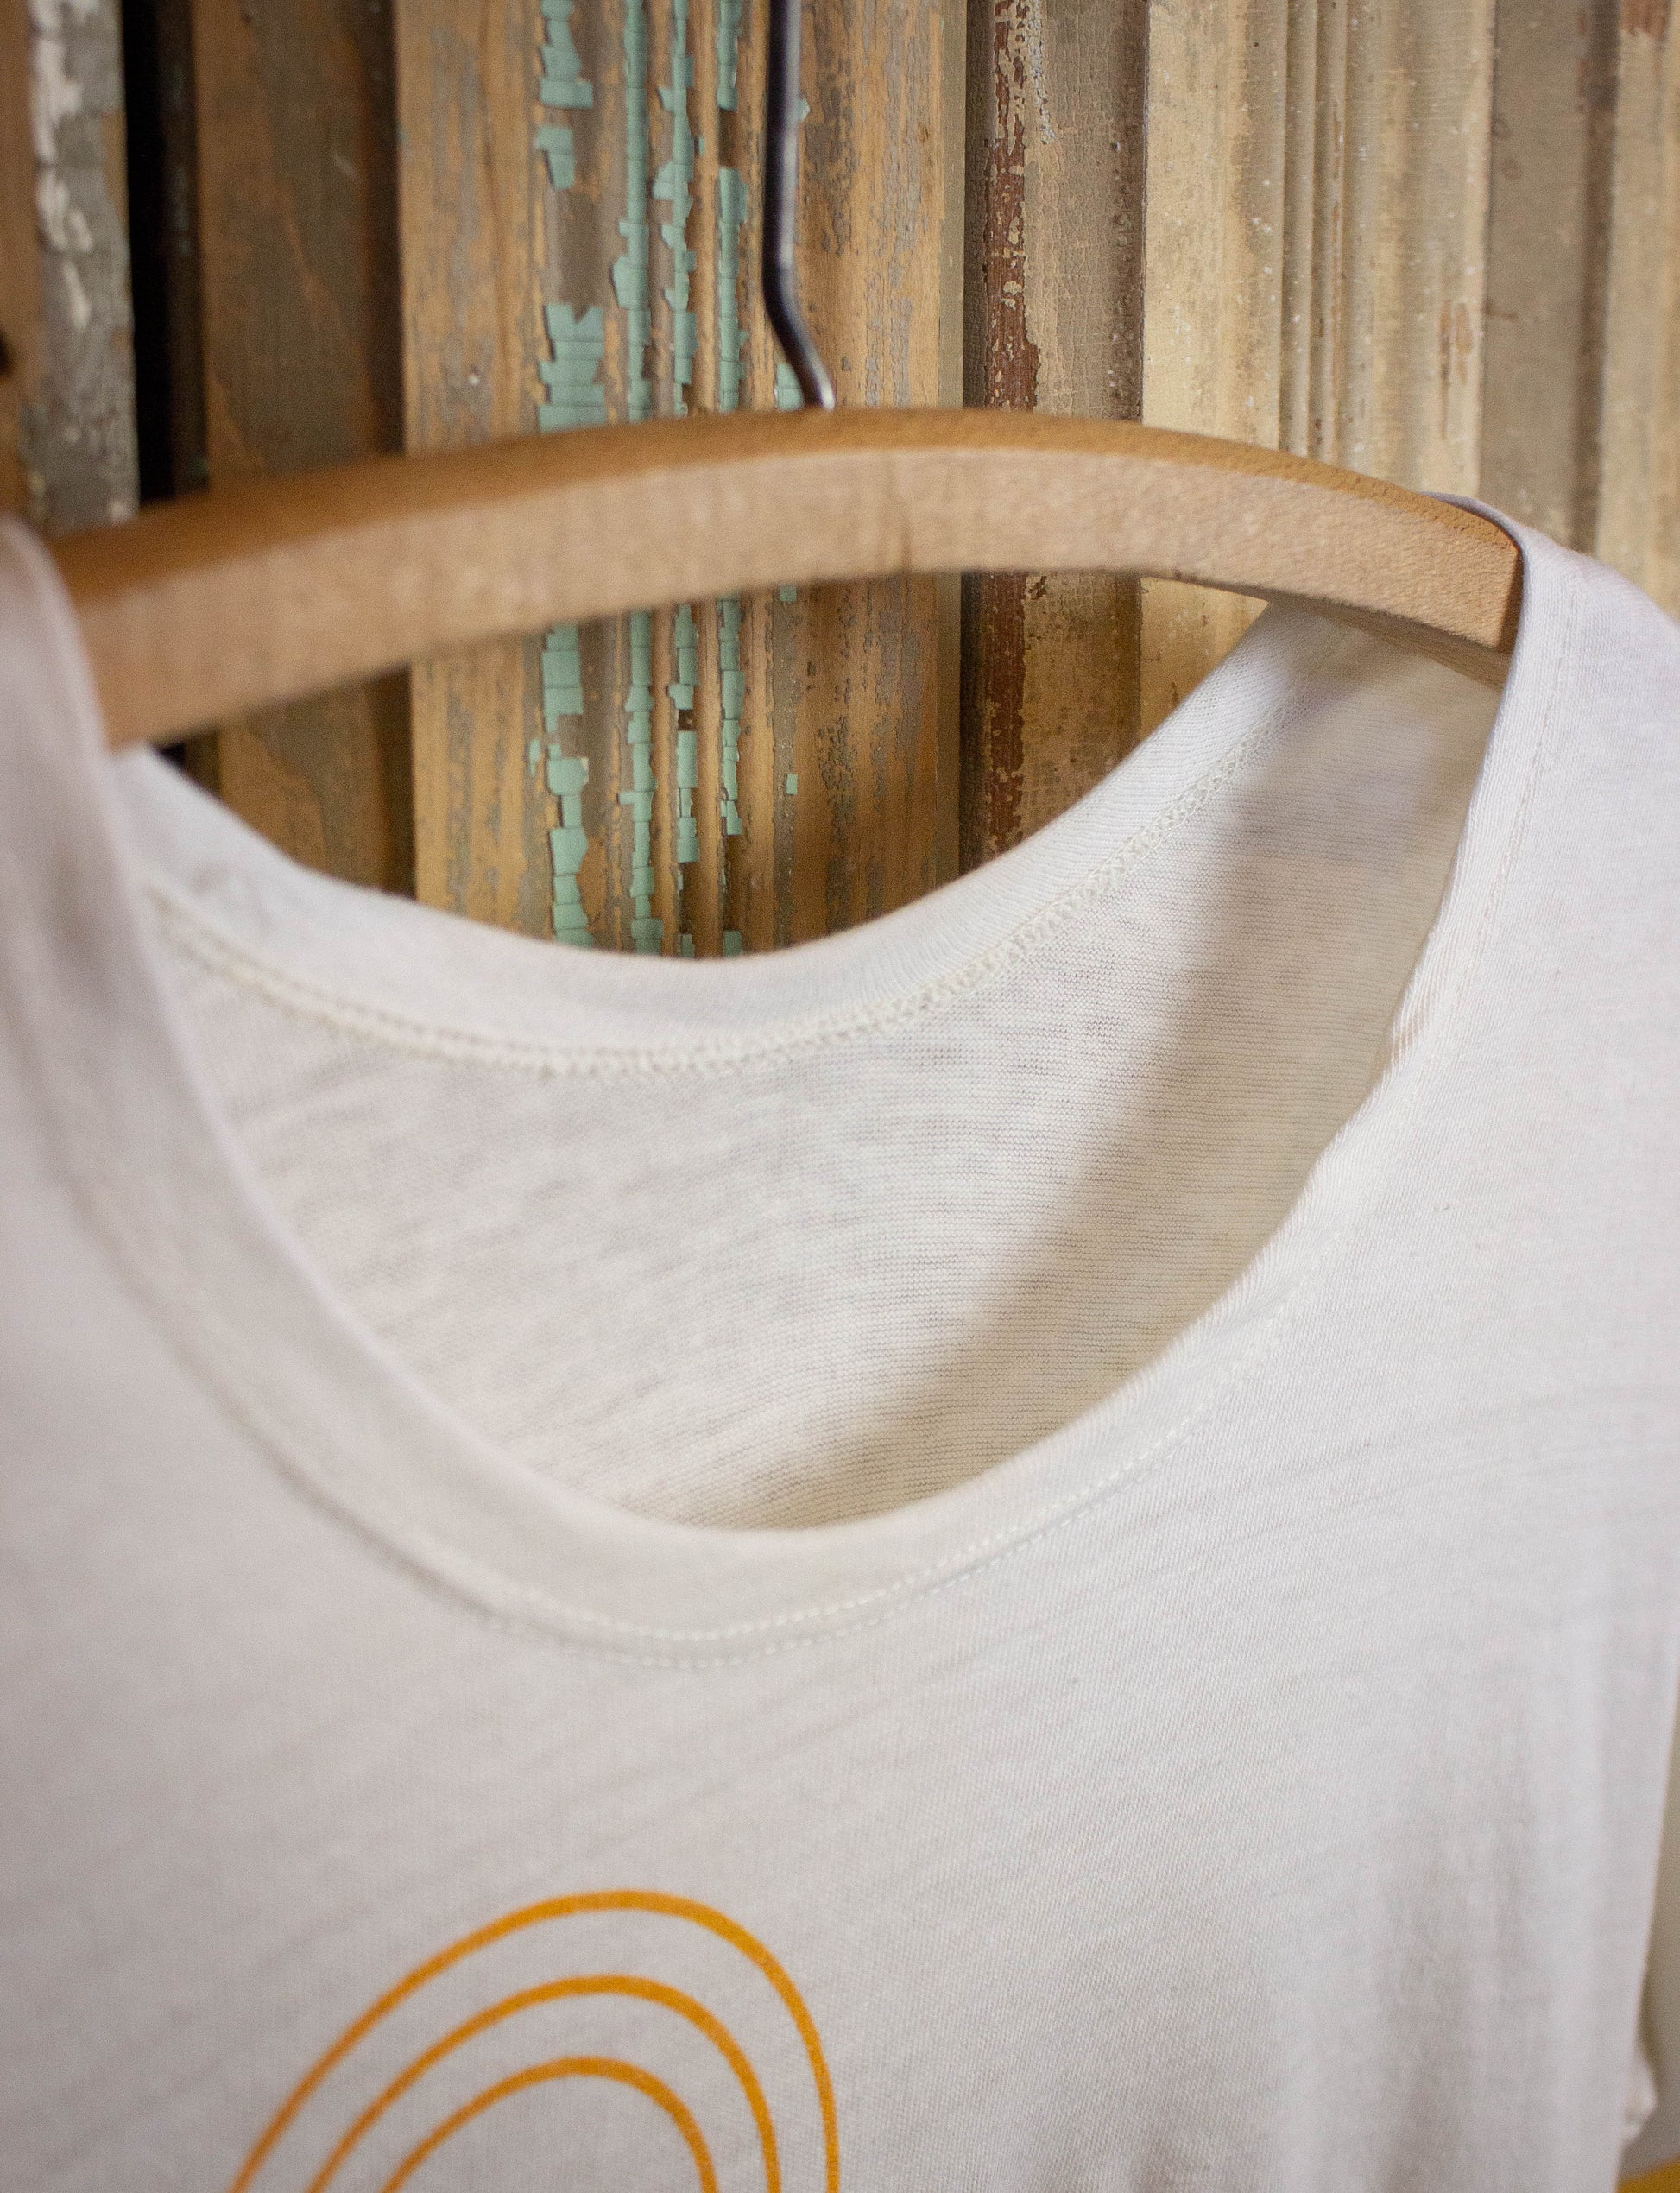 Vintage Sunset Sound Studios Graphic Ringer T Shirt 70s White and Yellow Medium